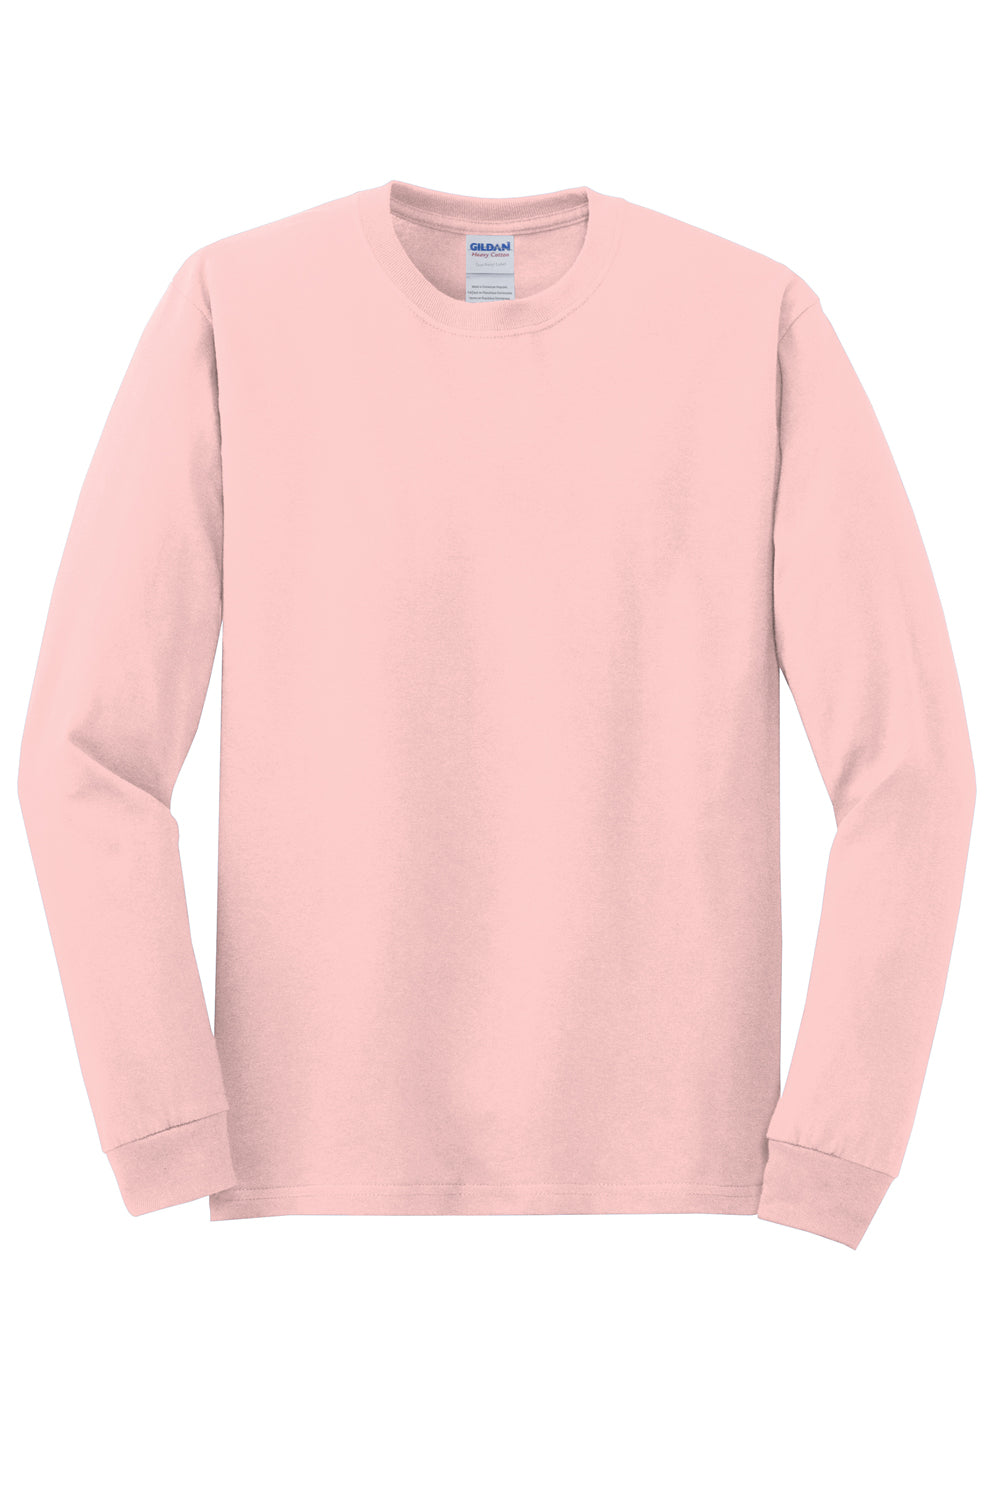 Gildan Mens Long Sleeve Crewneck T-Shirt Light Pink Flat Front